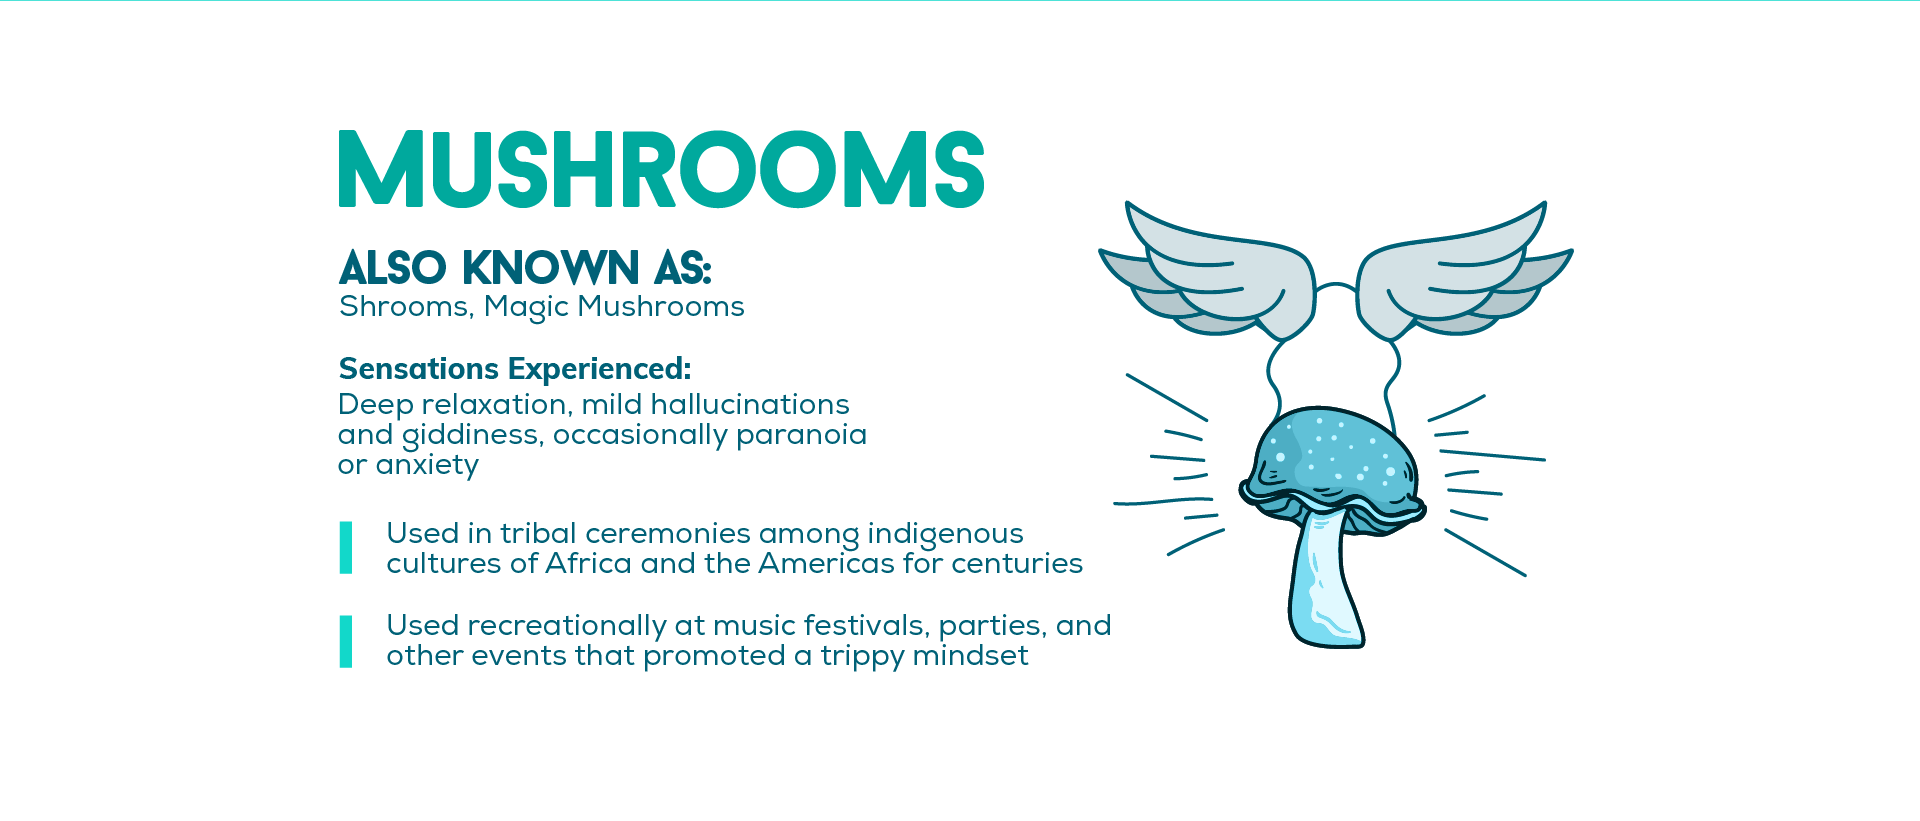 Shrooms in Popular Culture